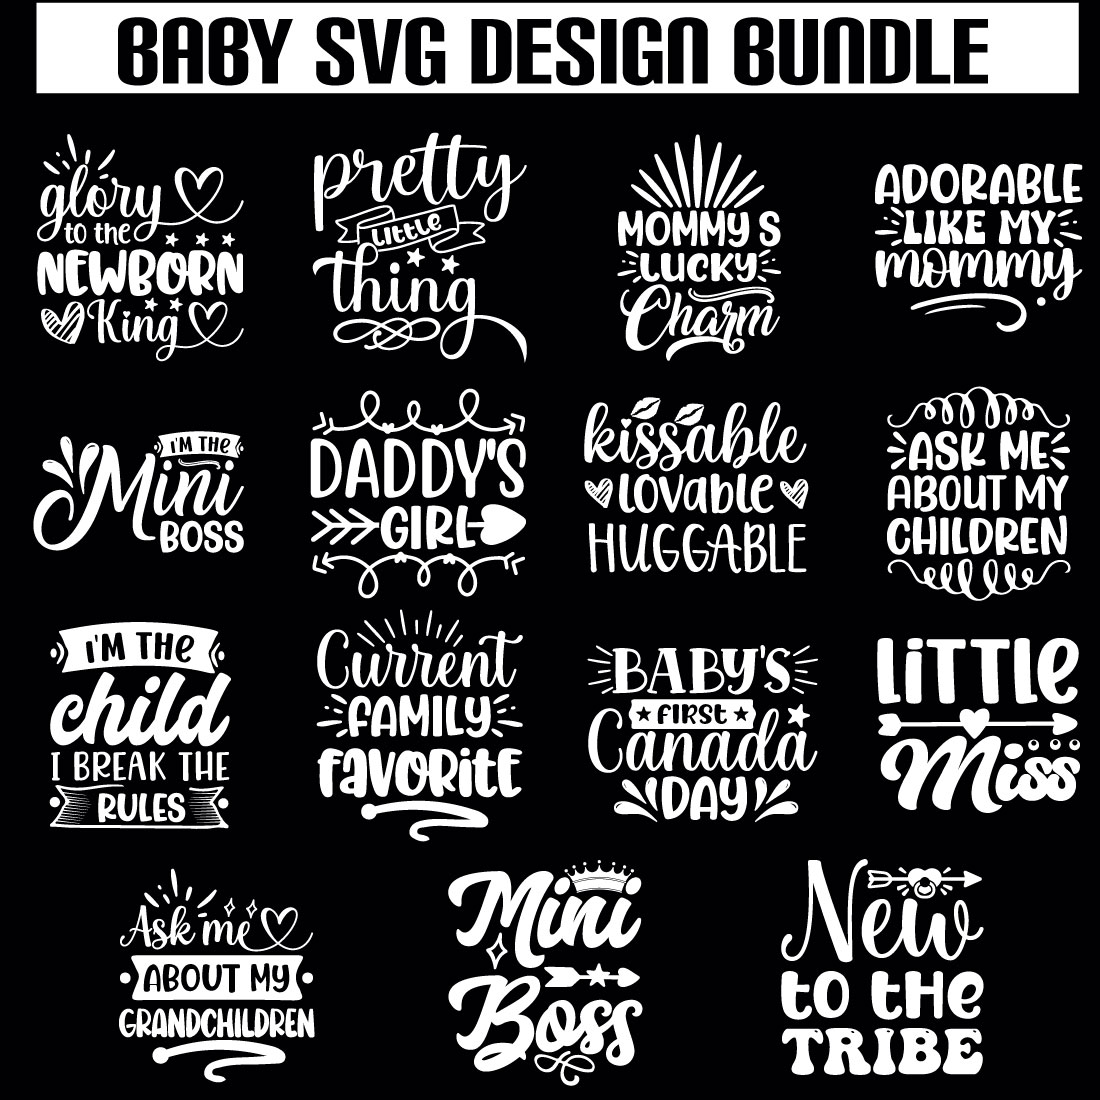 Baby svg design bundle preview image.